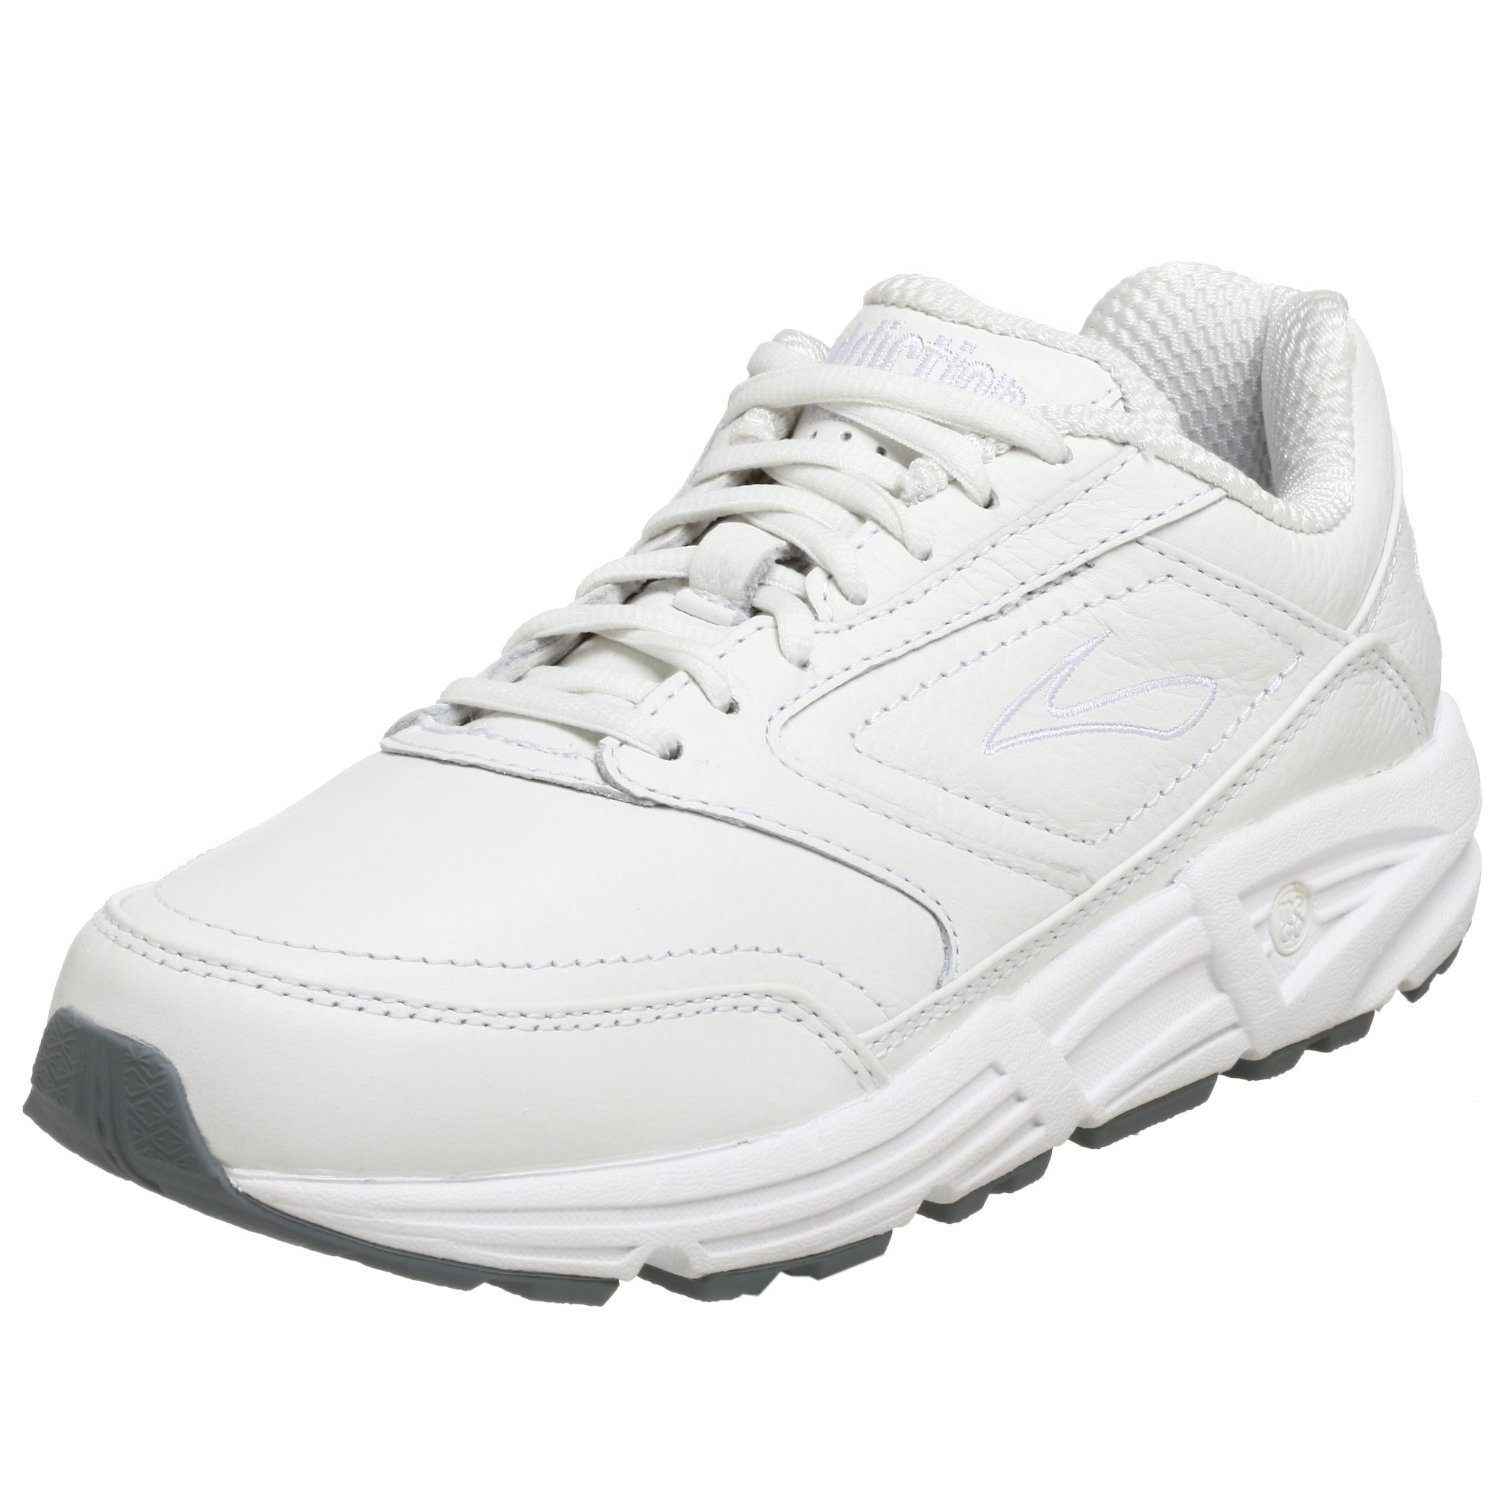 brooks-white-brooks-womens-addiction-walker-walking-shoe-product-1-2673099-681979300.jpeg